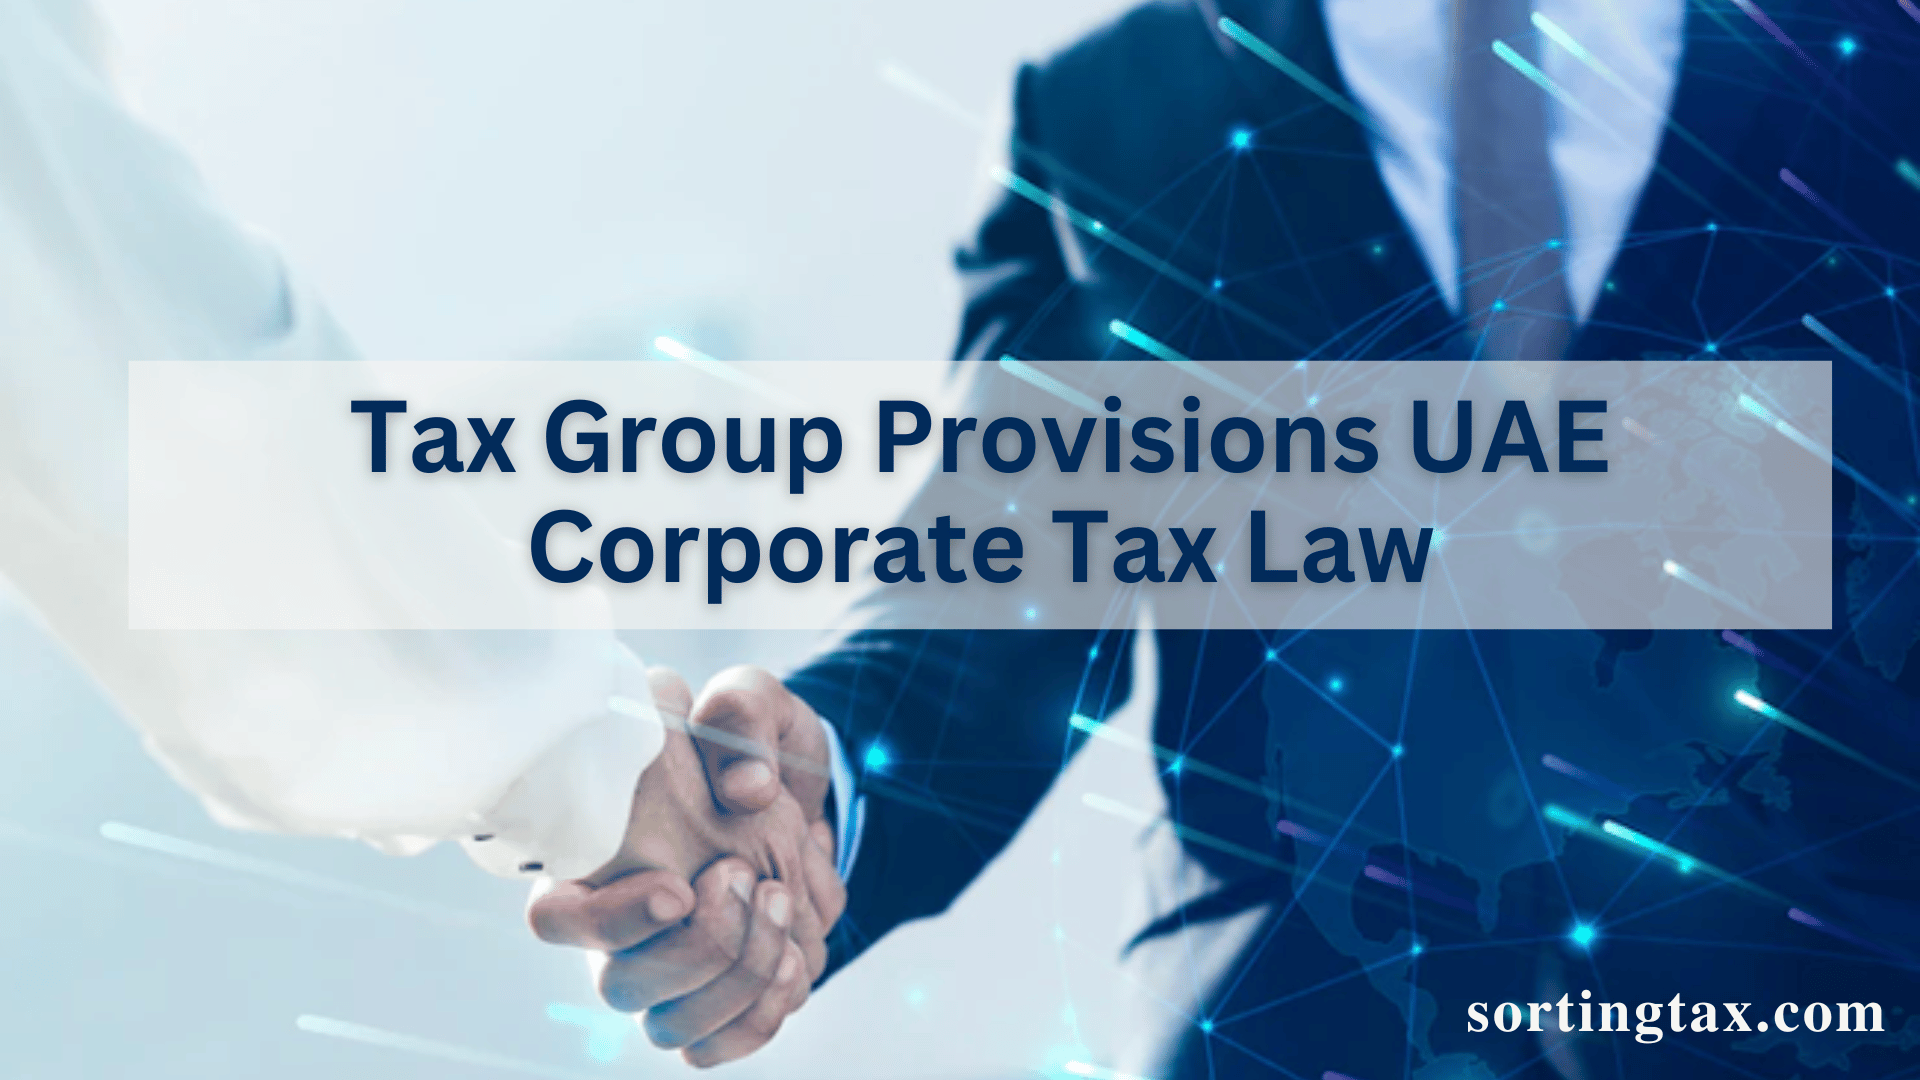 Tax Groups under UAE Corporate Tax